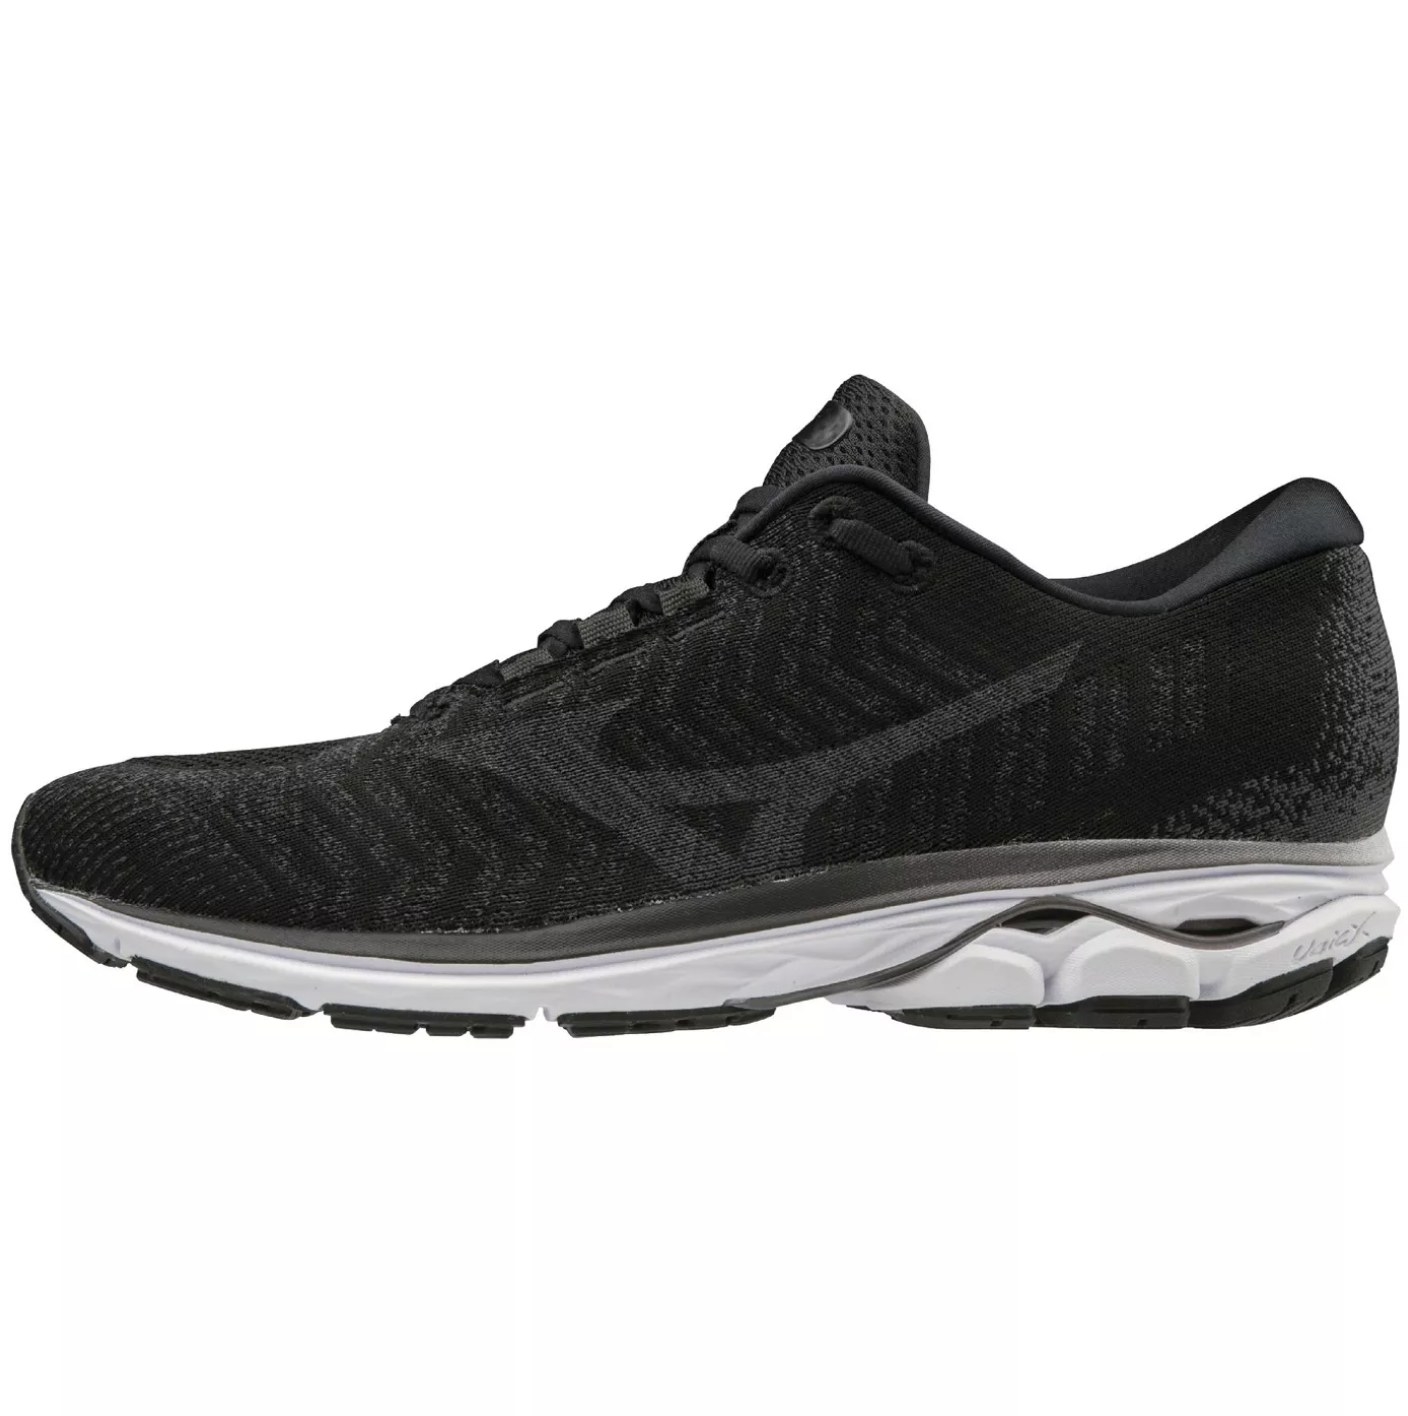 A black men&#x27;s running shoe